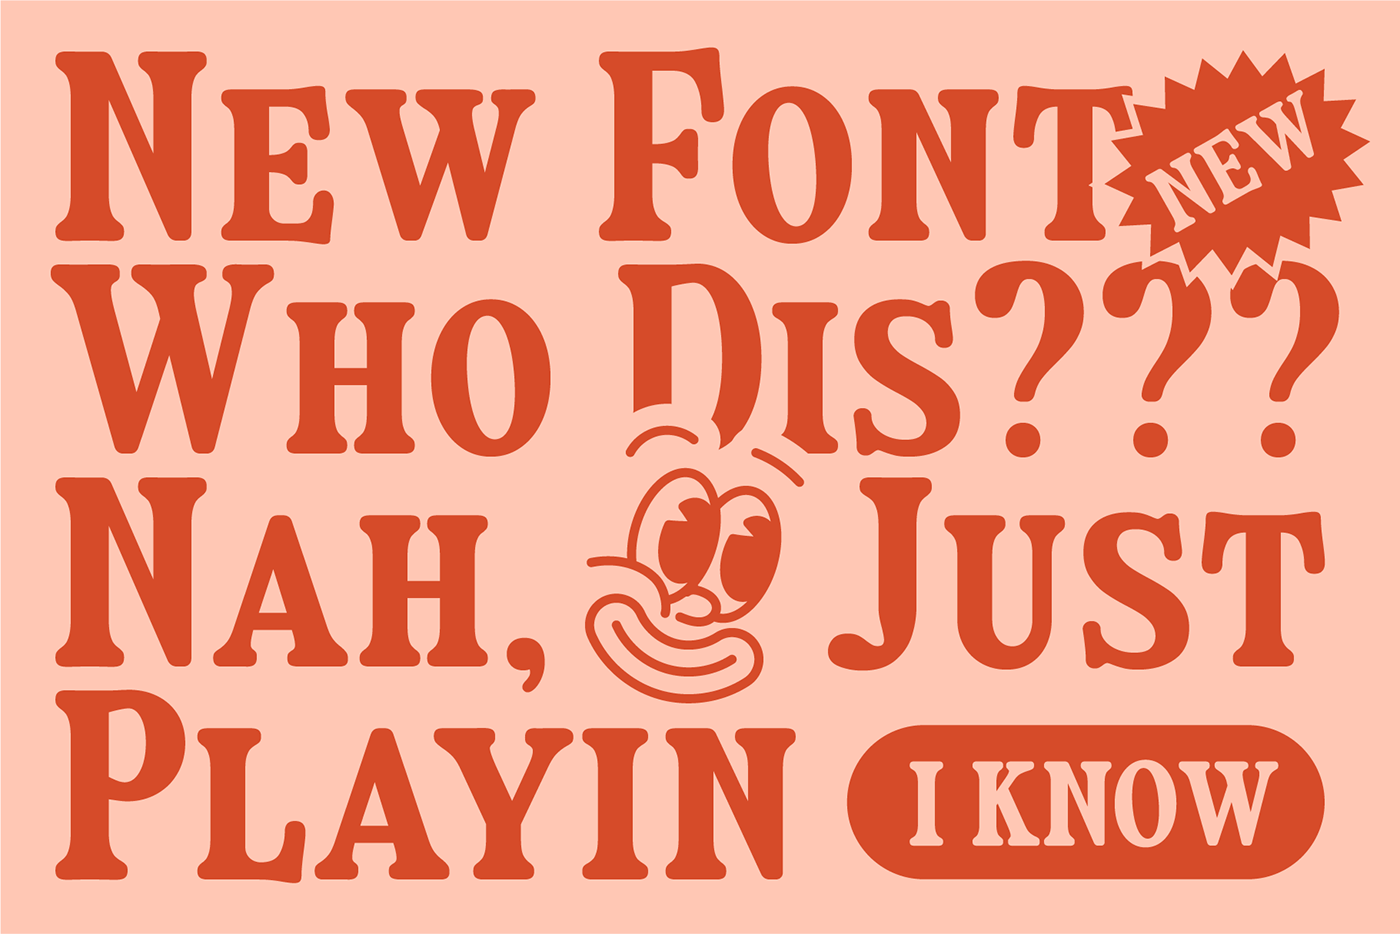 new font who dis? nah just playin, its fiyona